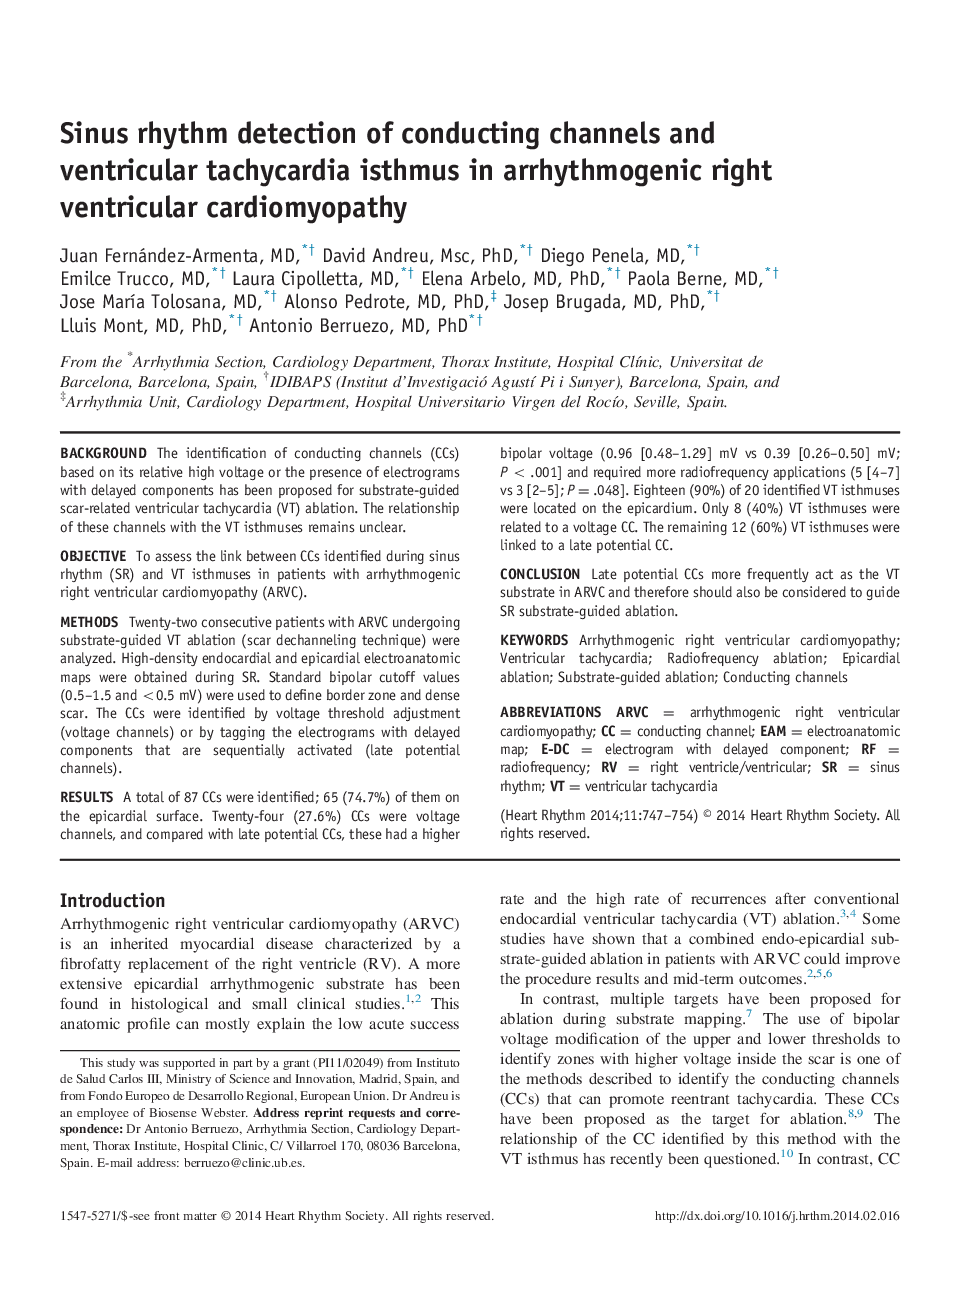 Sinus rhythm detection of conducting channels and ventricular tachycardia isthmus in arrhythmogenic right ventricular cardiomyopathy